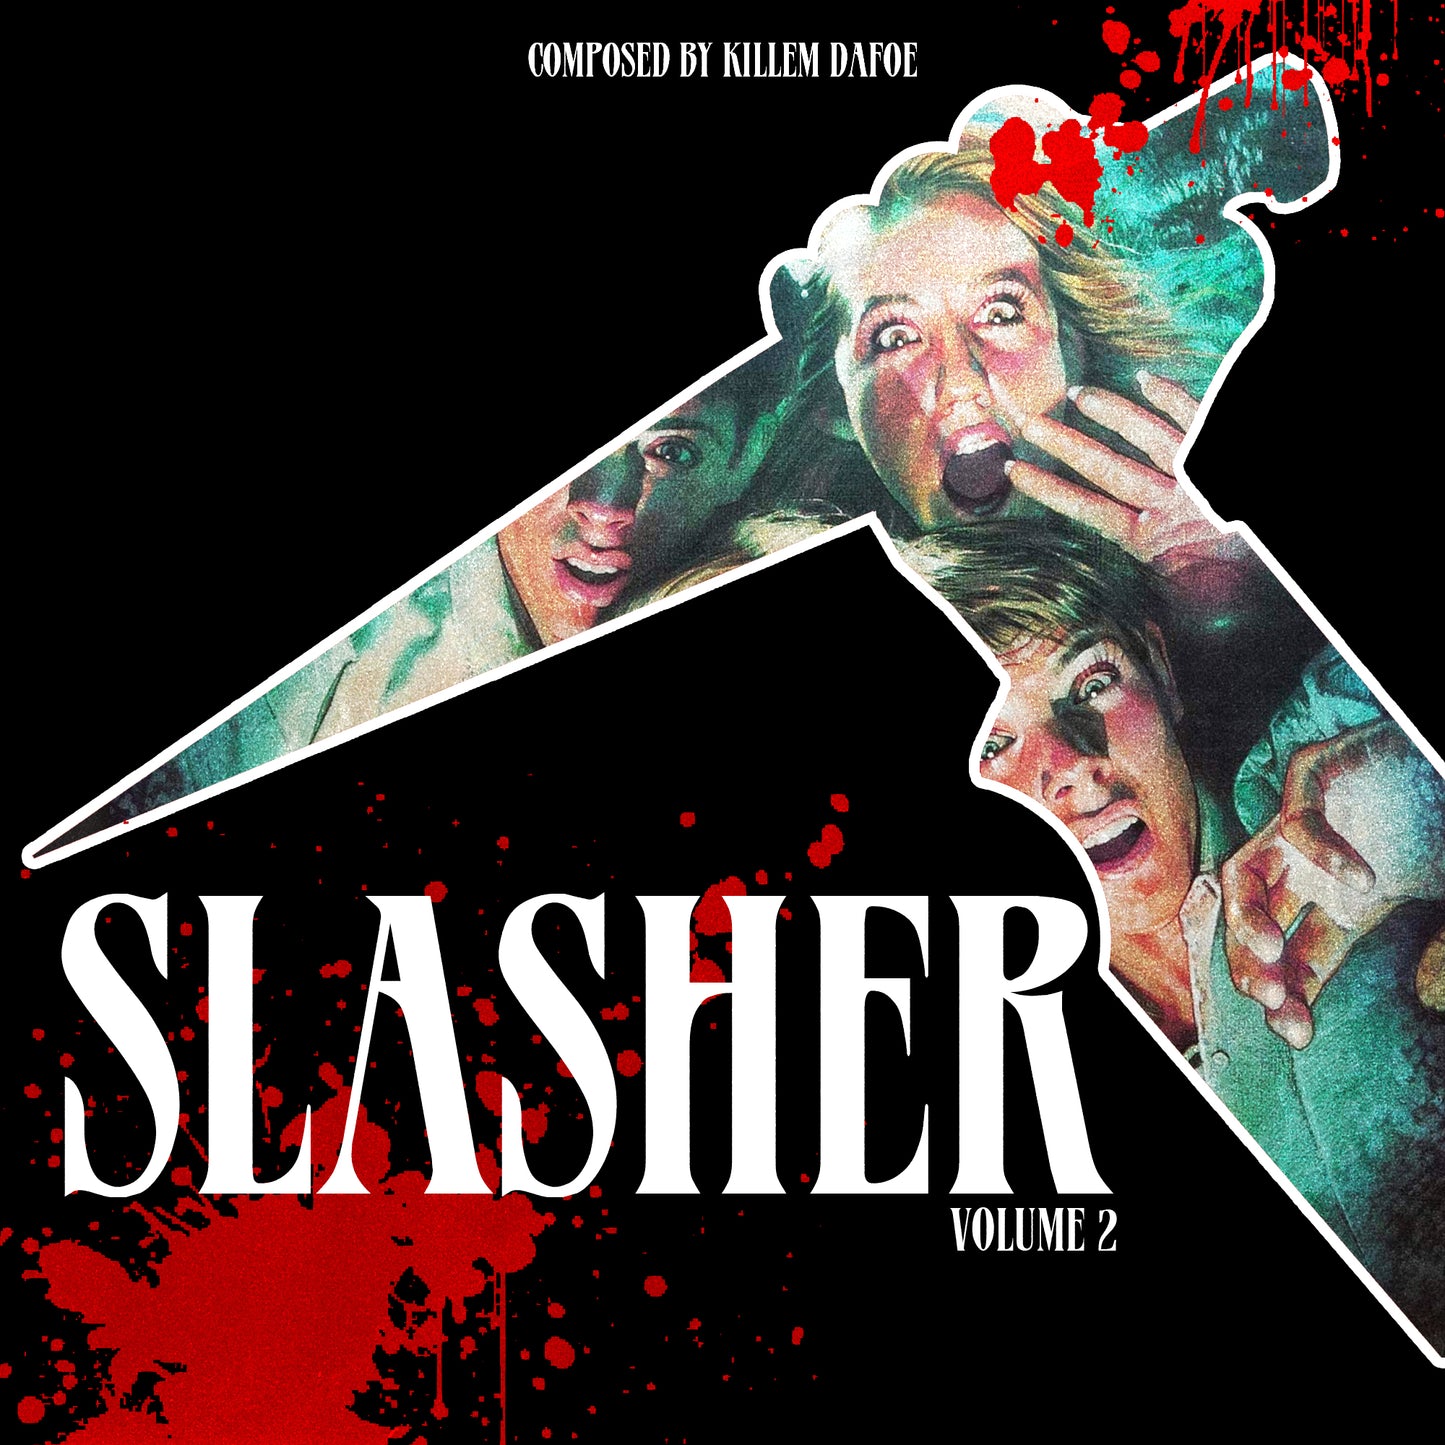 Slasher Vol 1 – The NUVU Collective